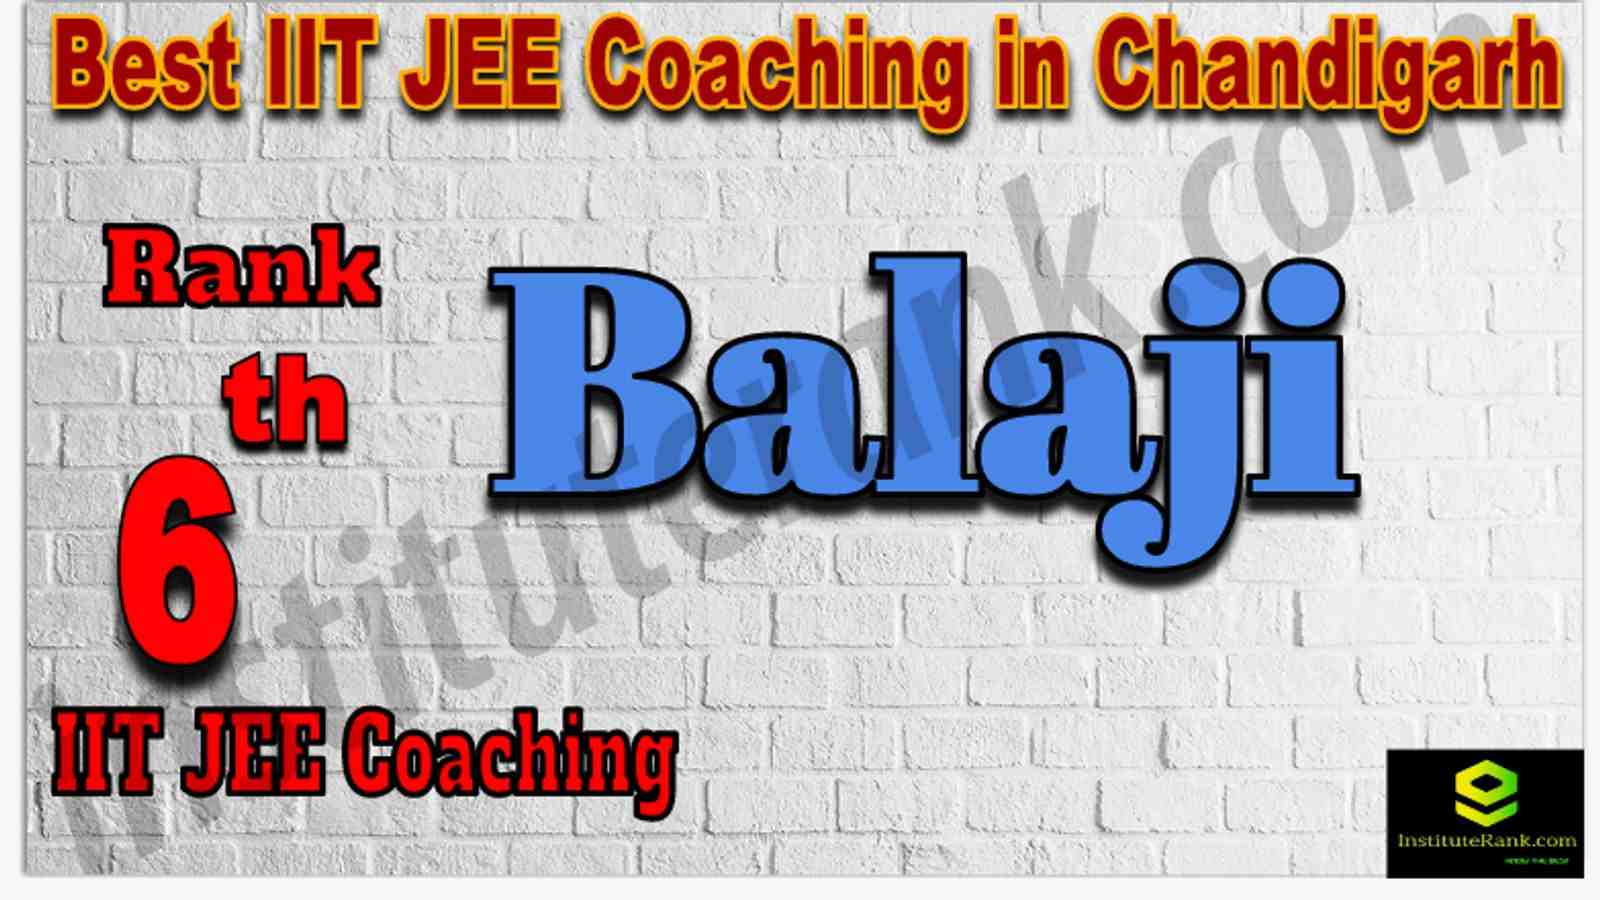 Rank 6th Best IIT JEE Coaching in Chandigarh